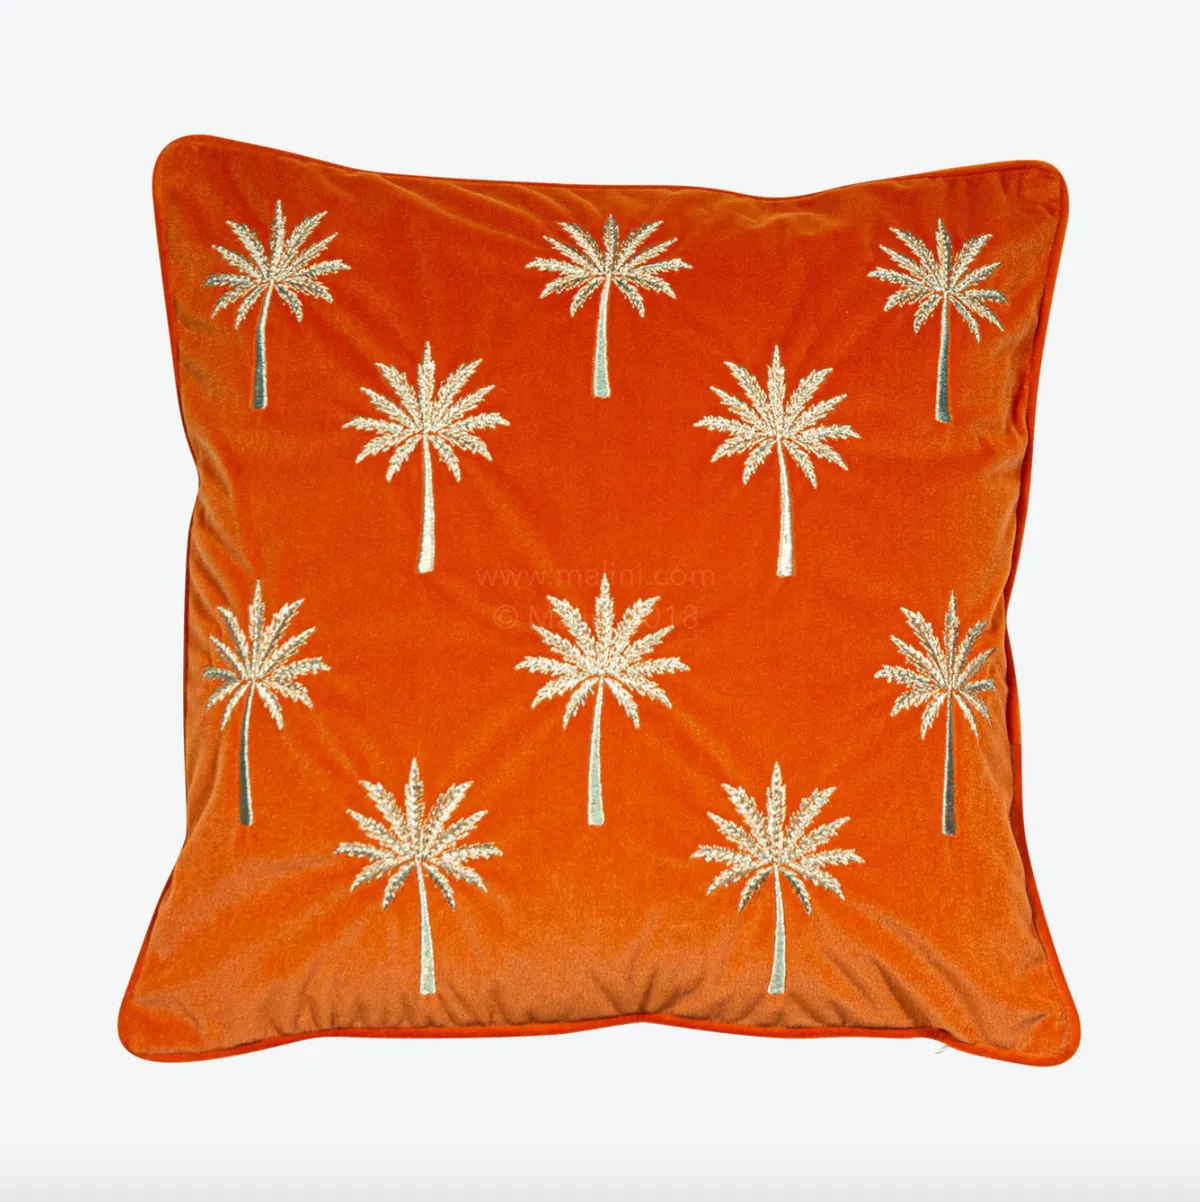 Miami Cushion in Orange